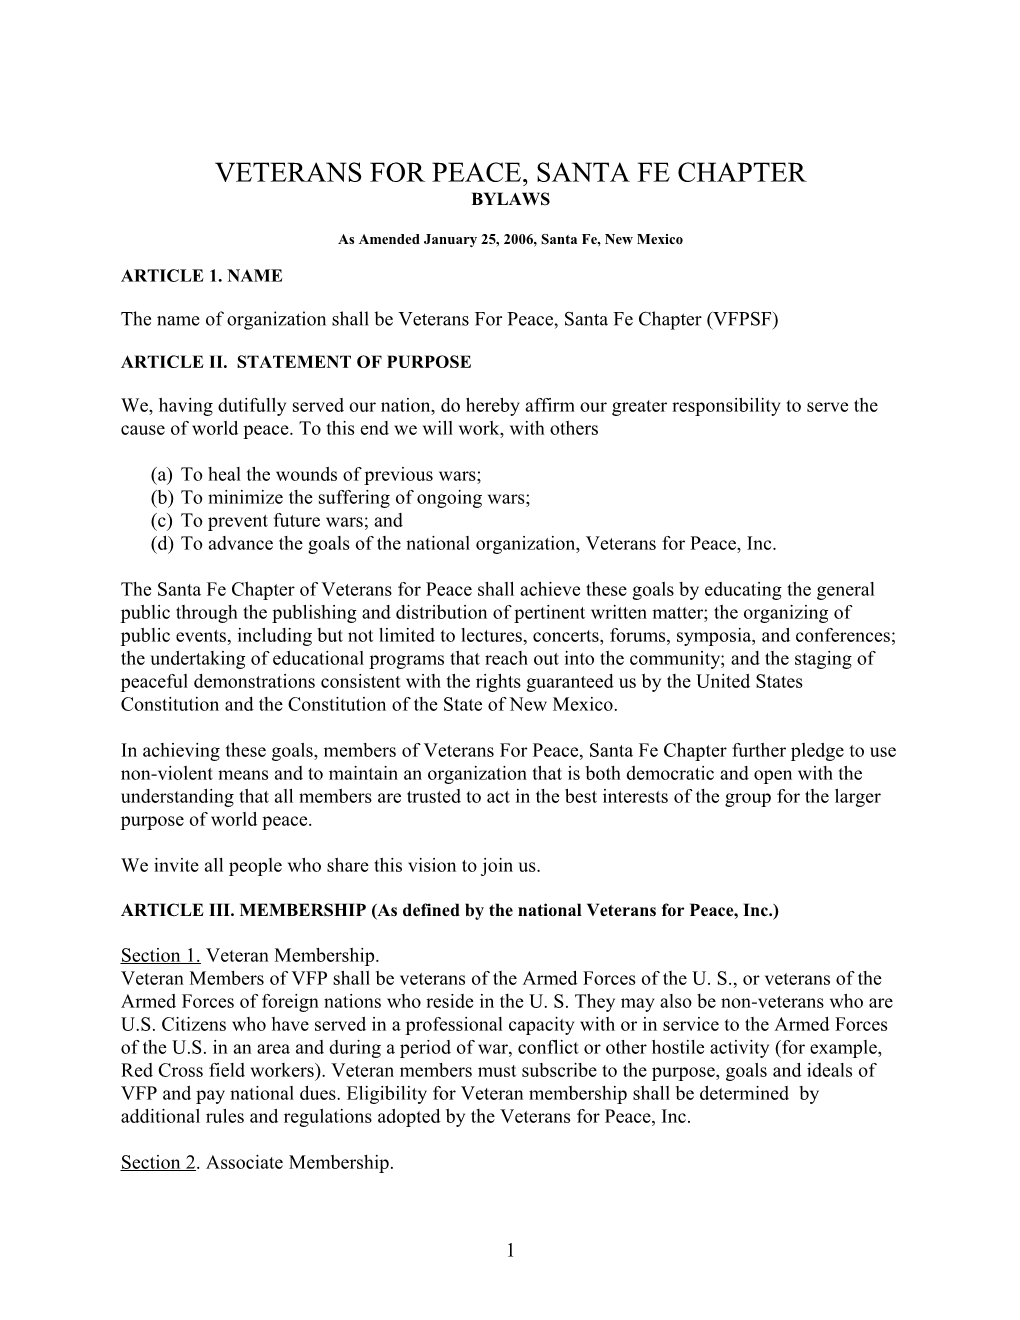 Veterans for Peace, Inc